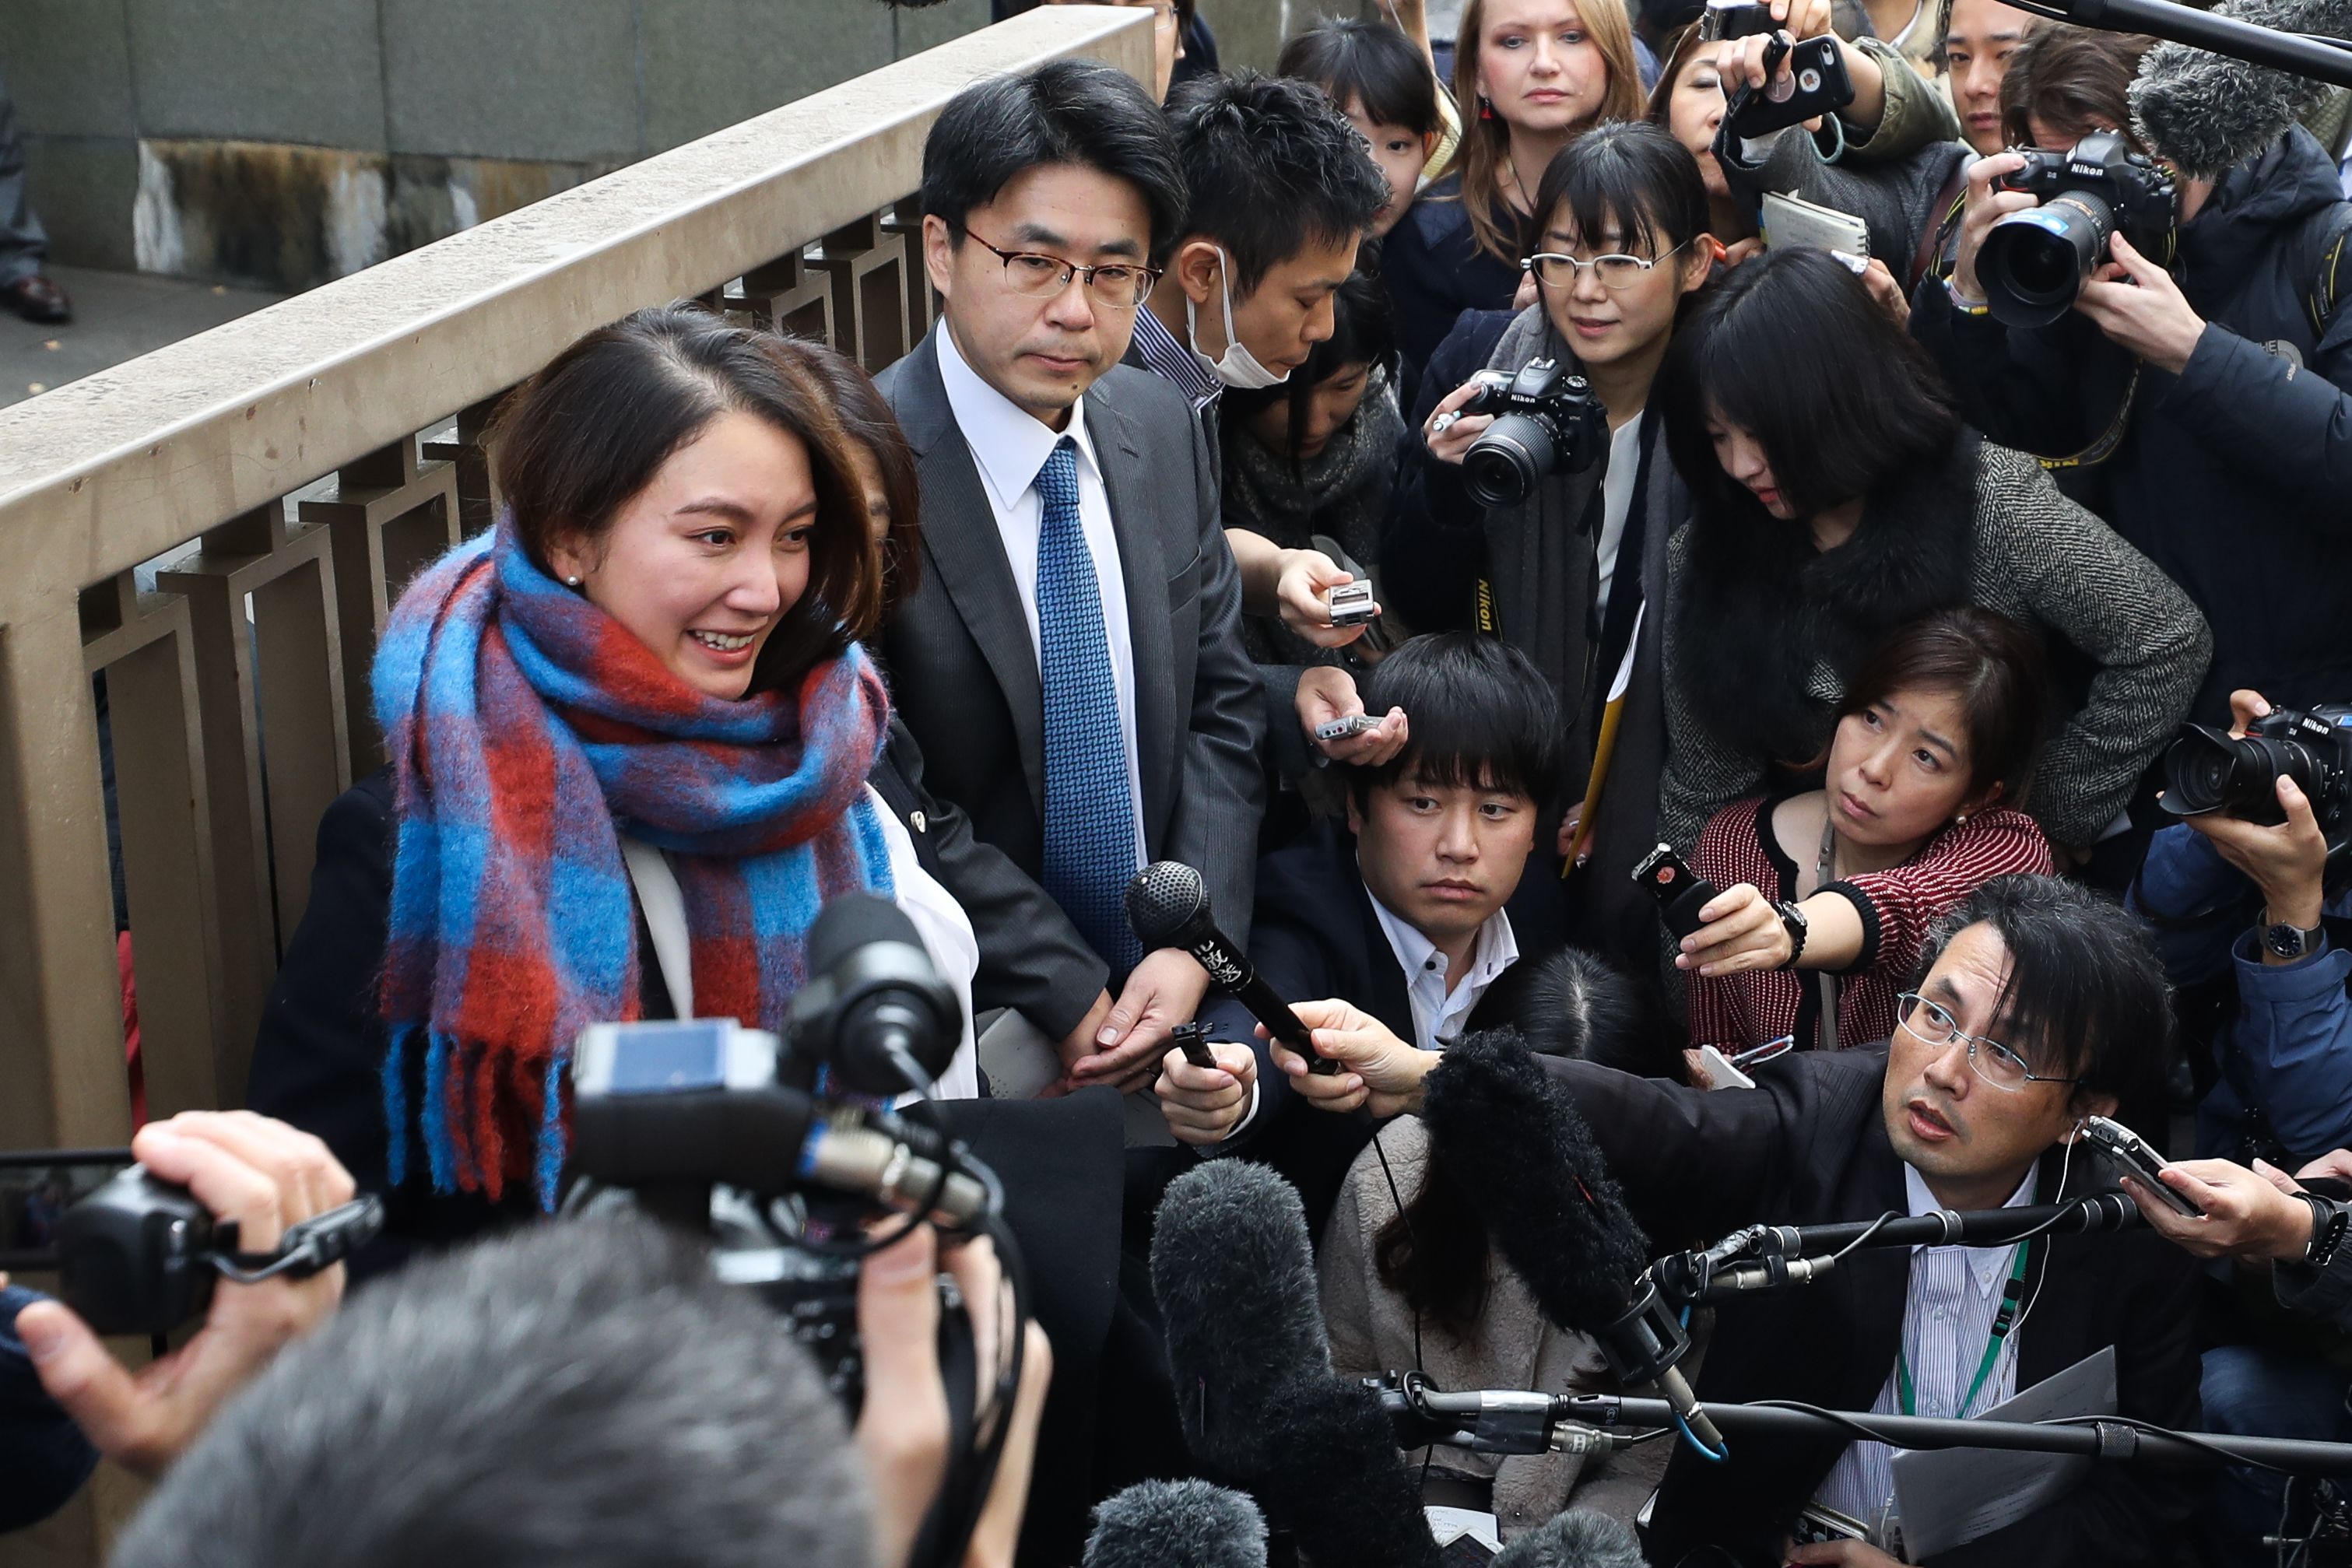 Japani Aunty Rap Sex - Shiori Ito won civil case against her alleged rapist. But Japan's rape laws  need overhaul, campaigners say | CNN